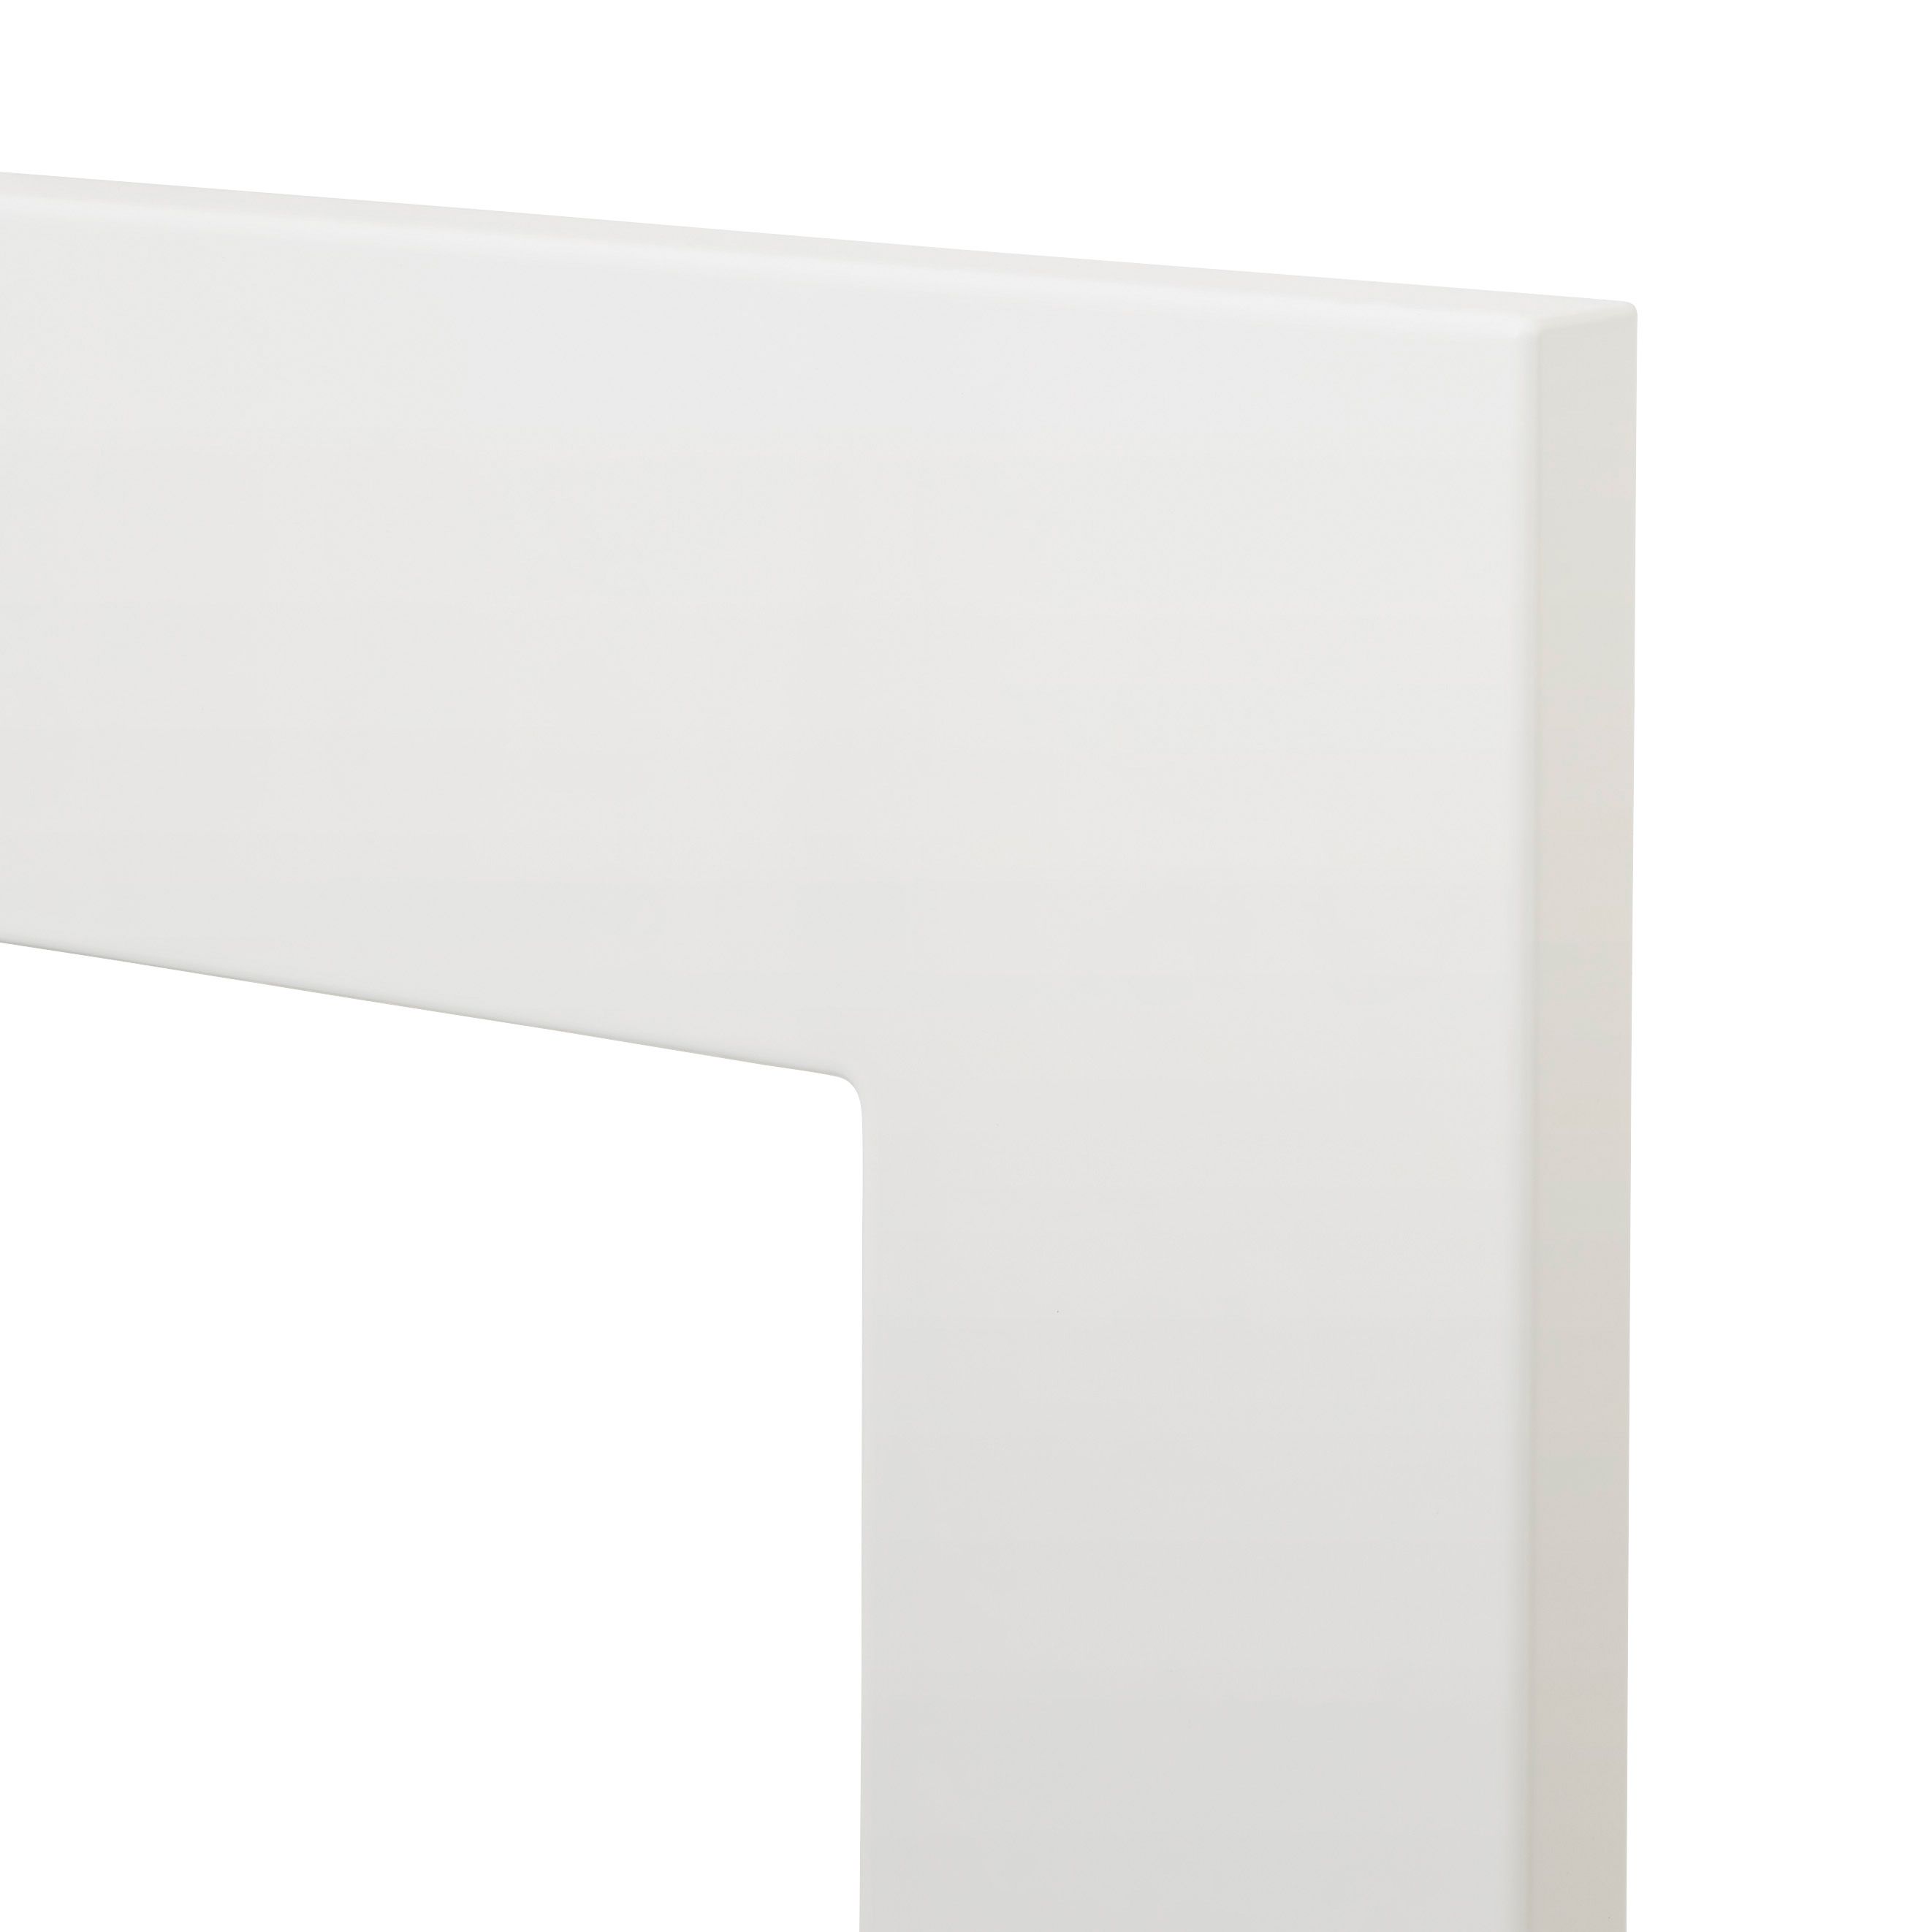 GoodHome Alisma High gloss white slab Tall glazed Cabinet door (W)300mm (H)715mm (T)18mm